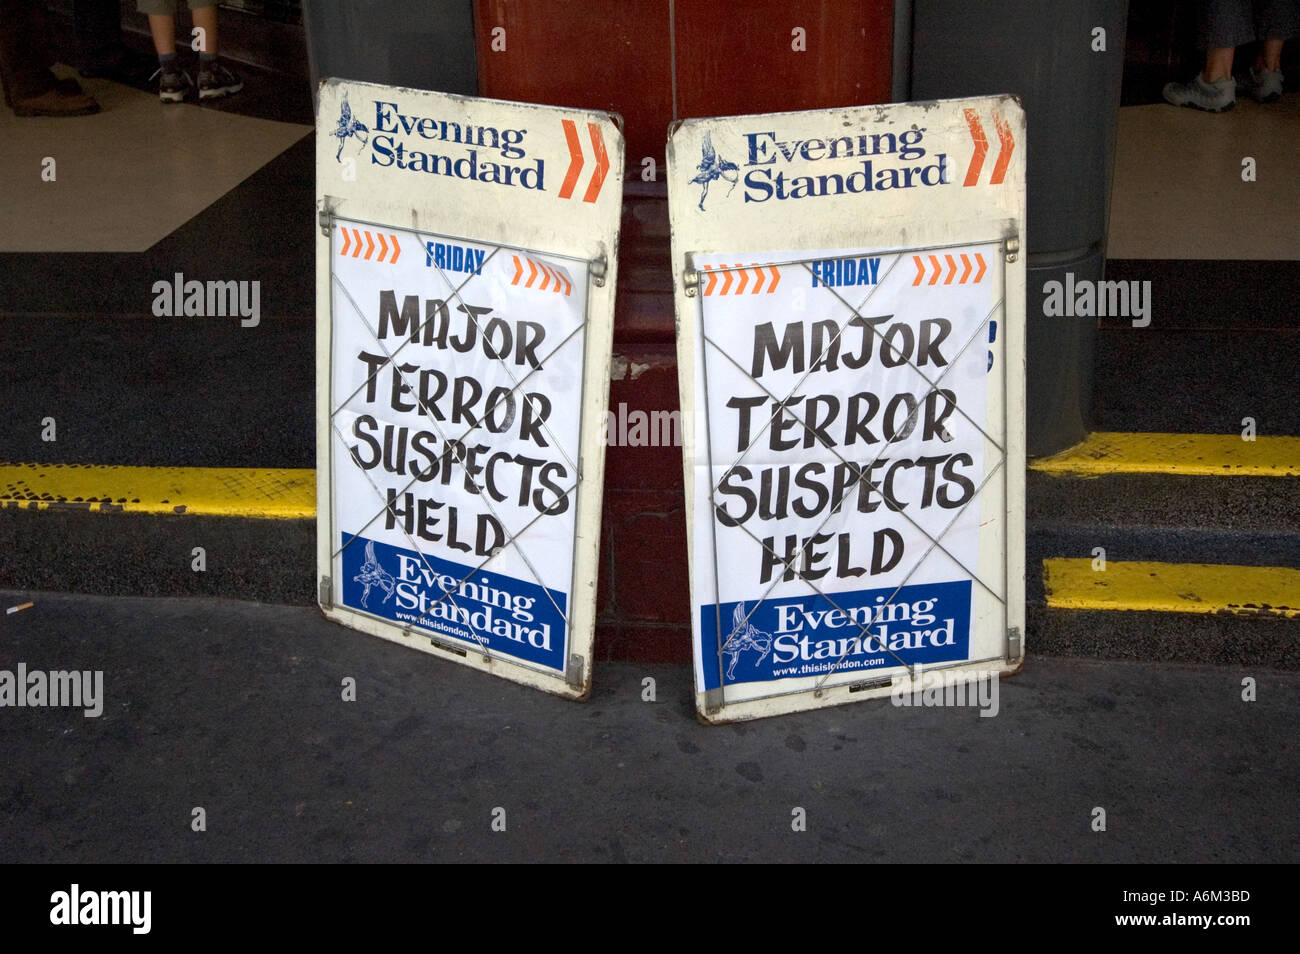 Evening Standard london newspaper headlines 'MAJOR TERROR SUSPECTS HELD' Central London Stock Photo